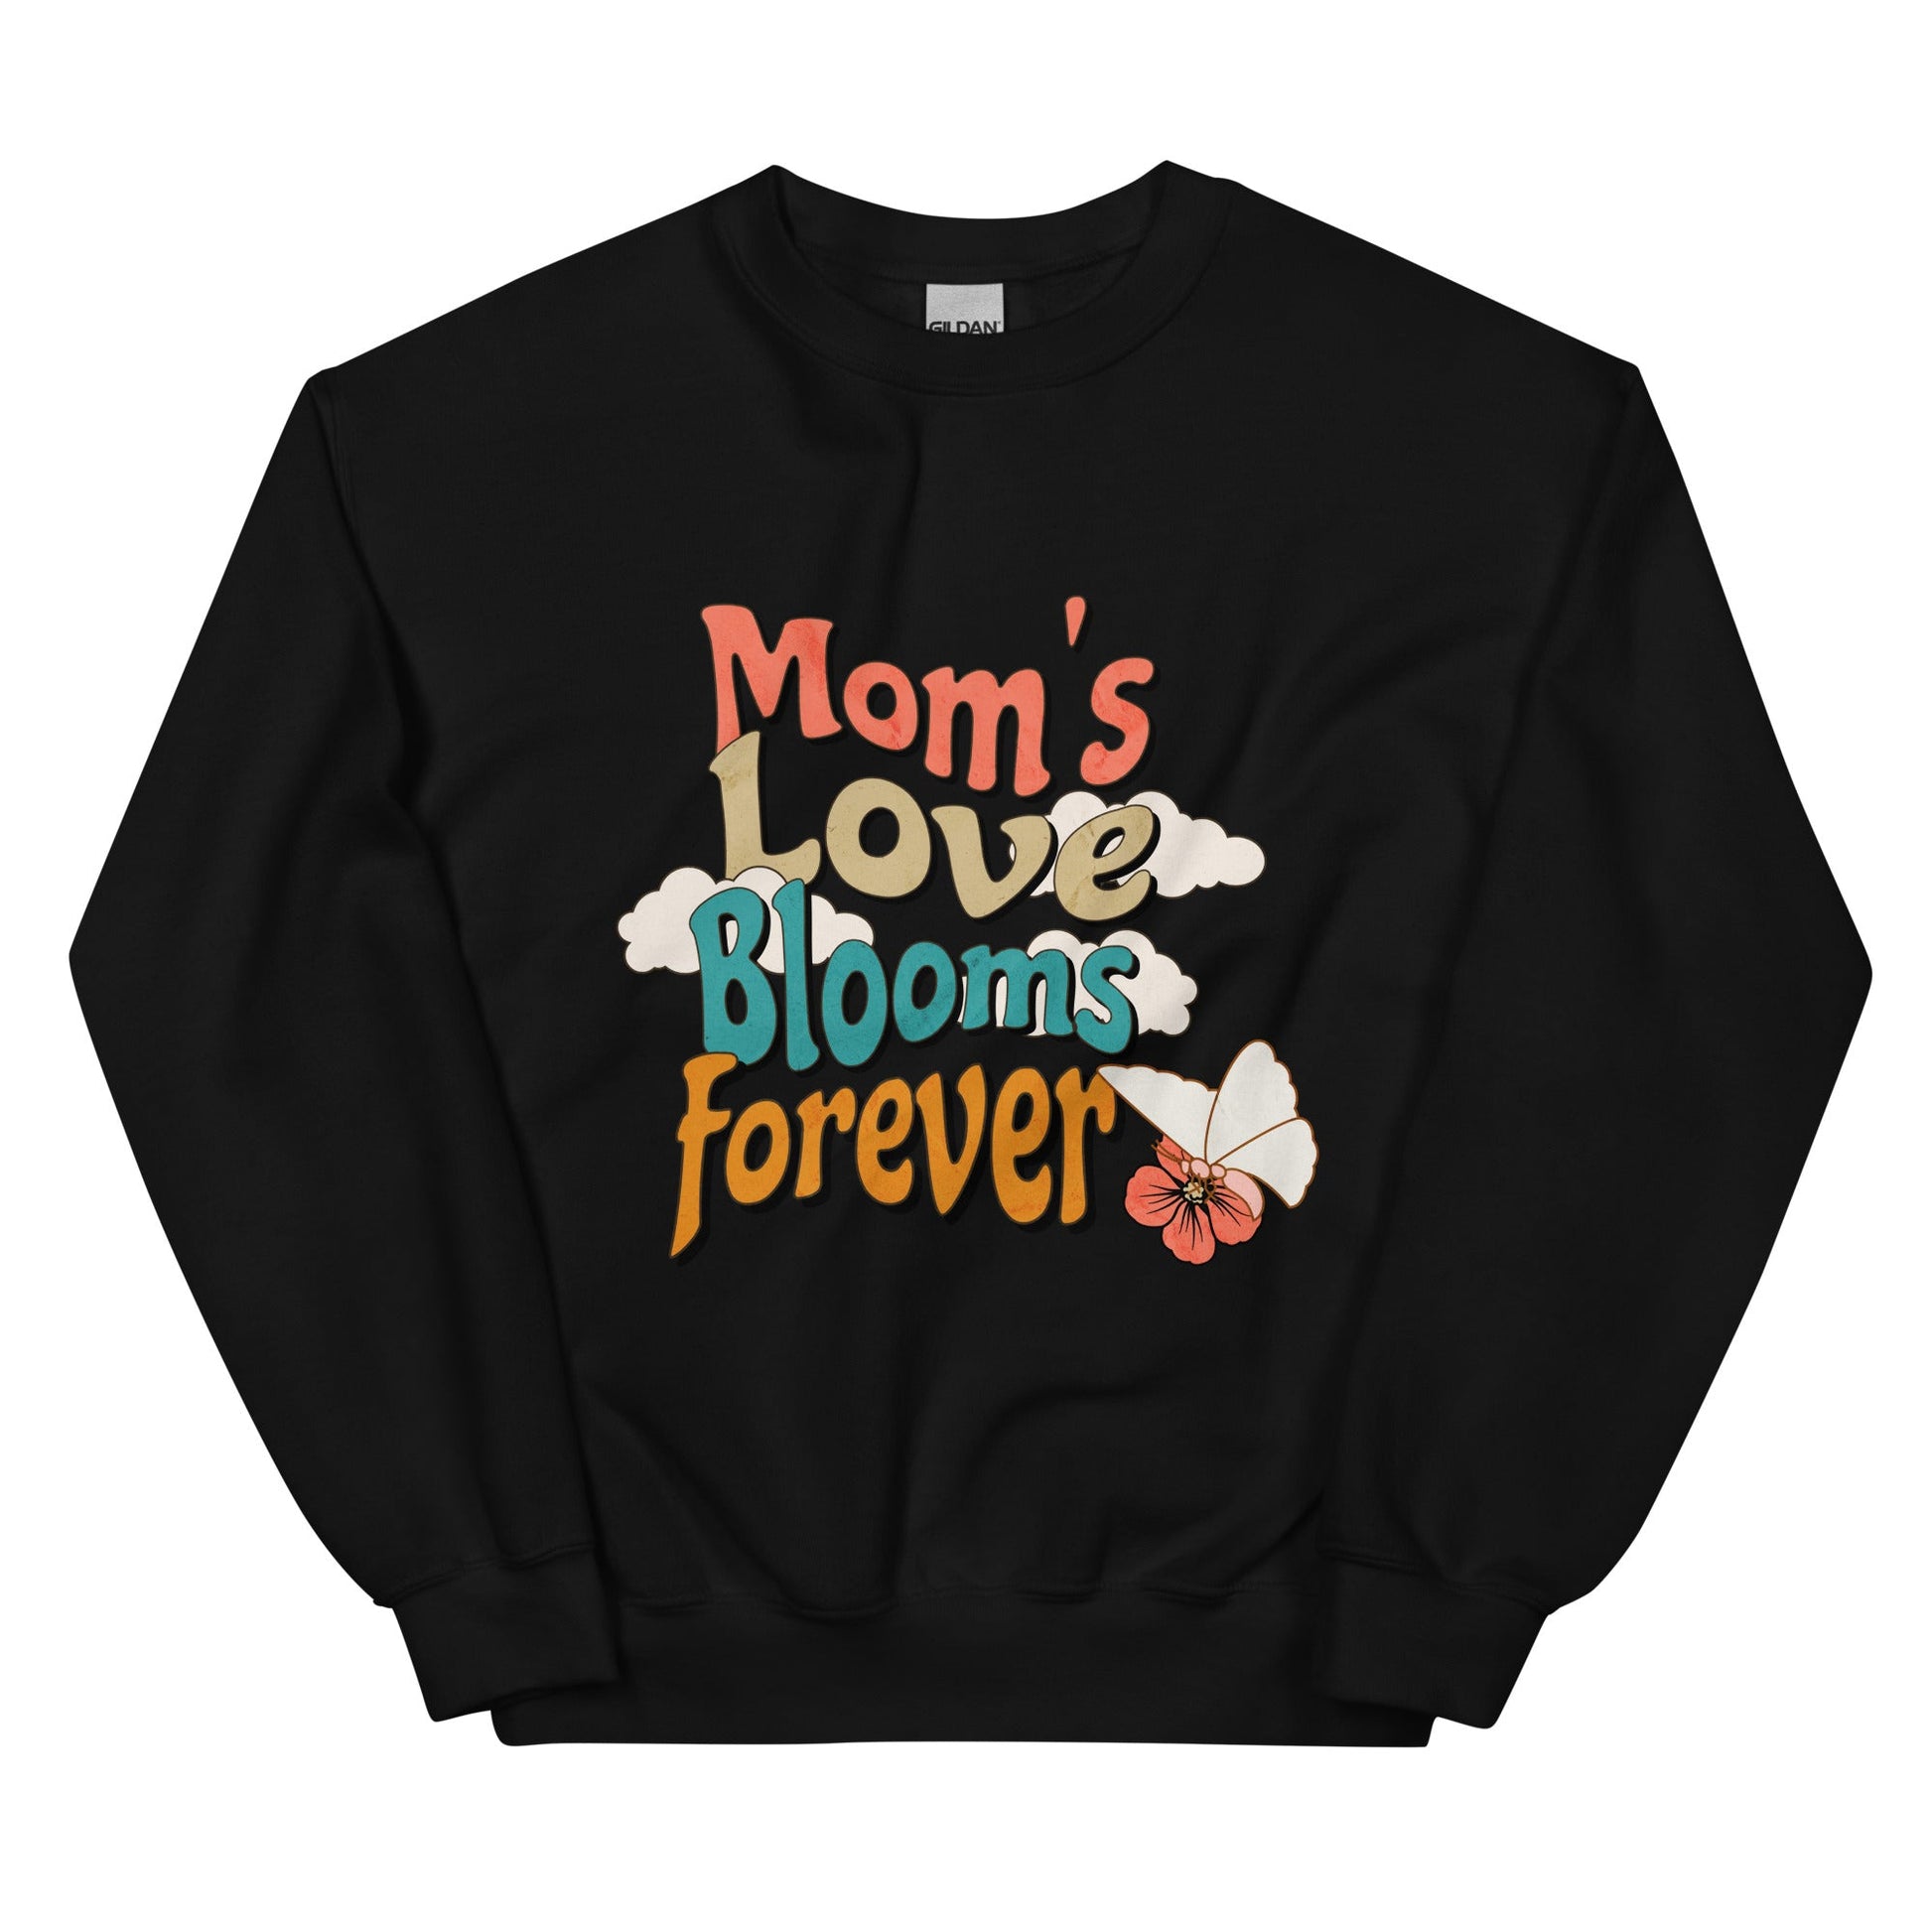 Mom's Love Blooms Forever Crewneck Sweatshirt-crewneck-Black-S-mysticalcherry